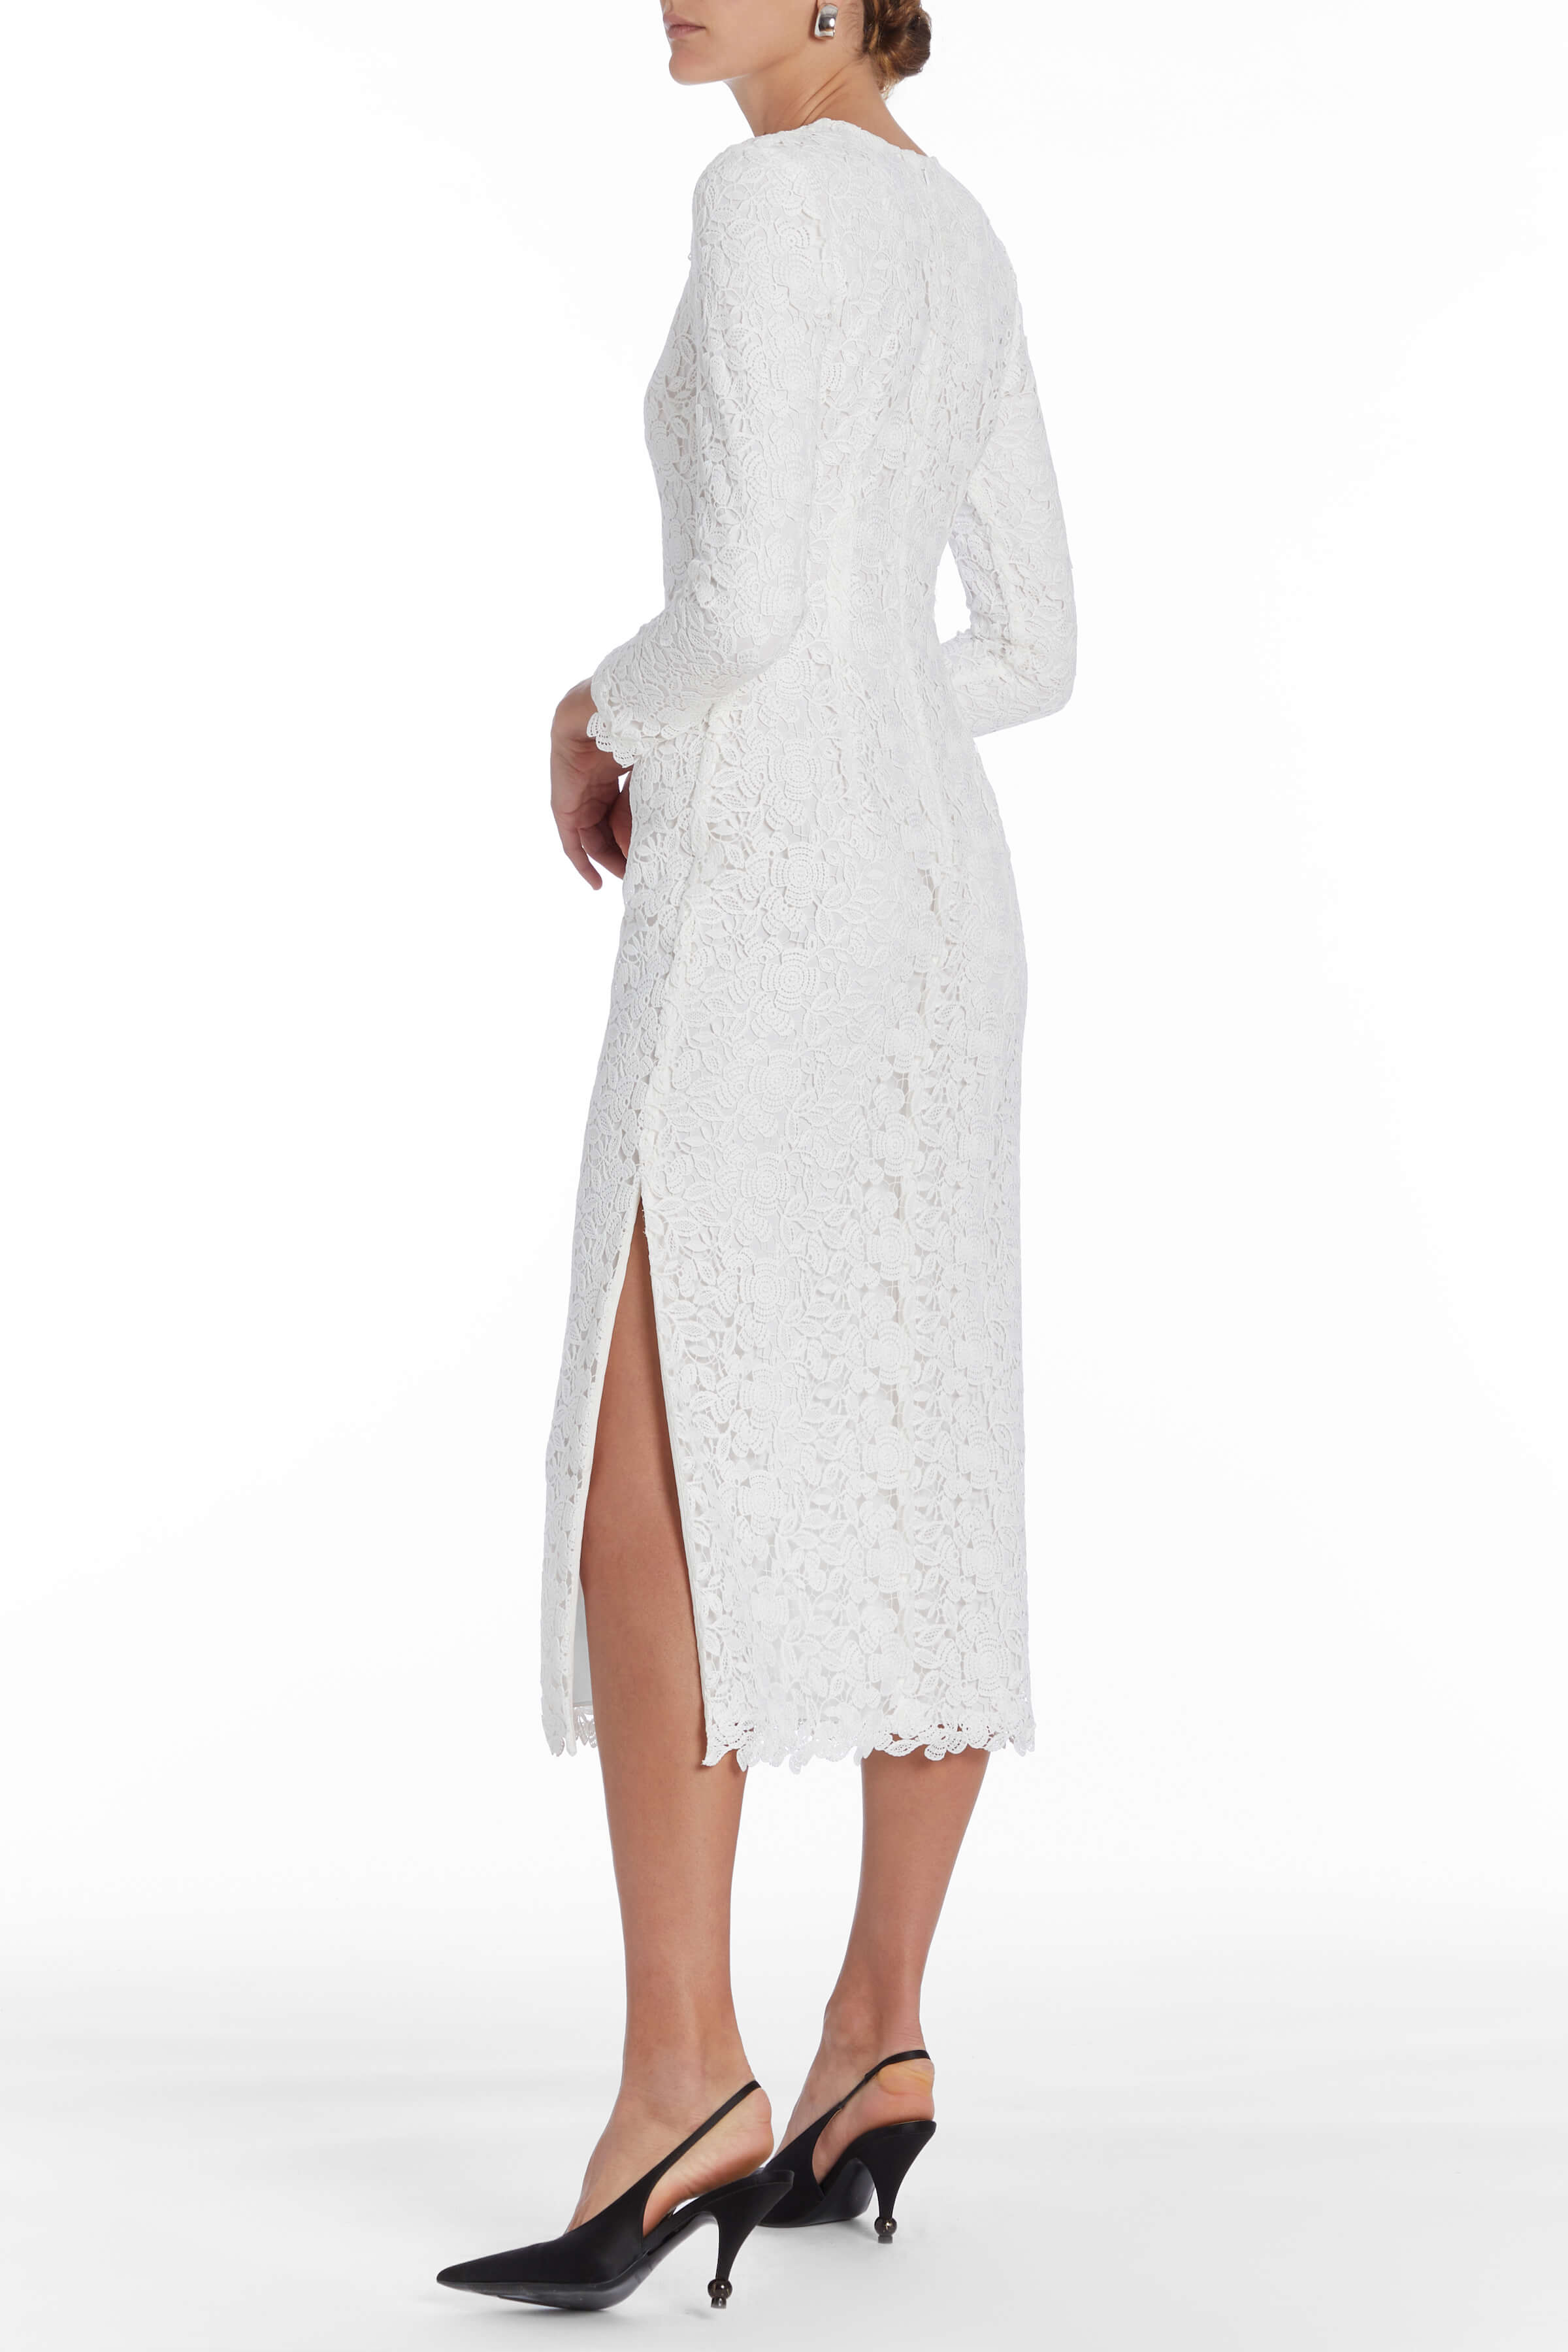 Arizona White Crochet Lace Midi Dress